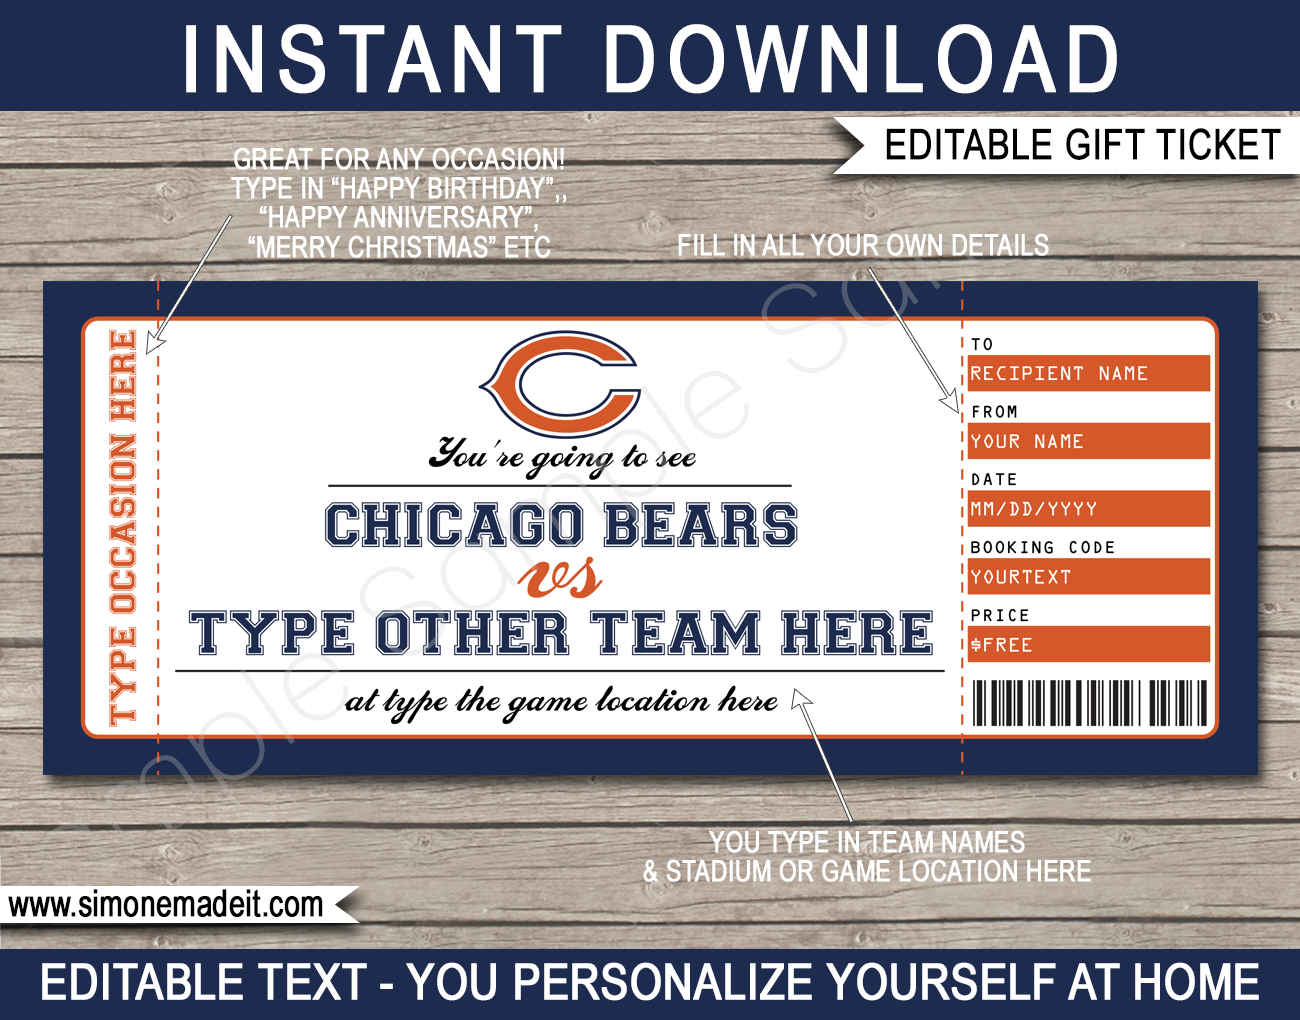 Chicago Bears Game Ticket Gift Voucher